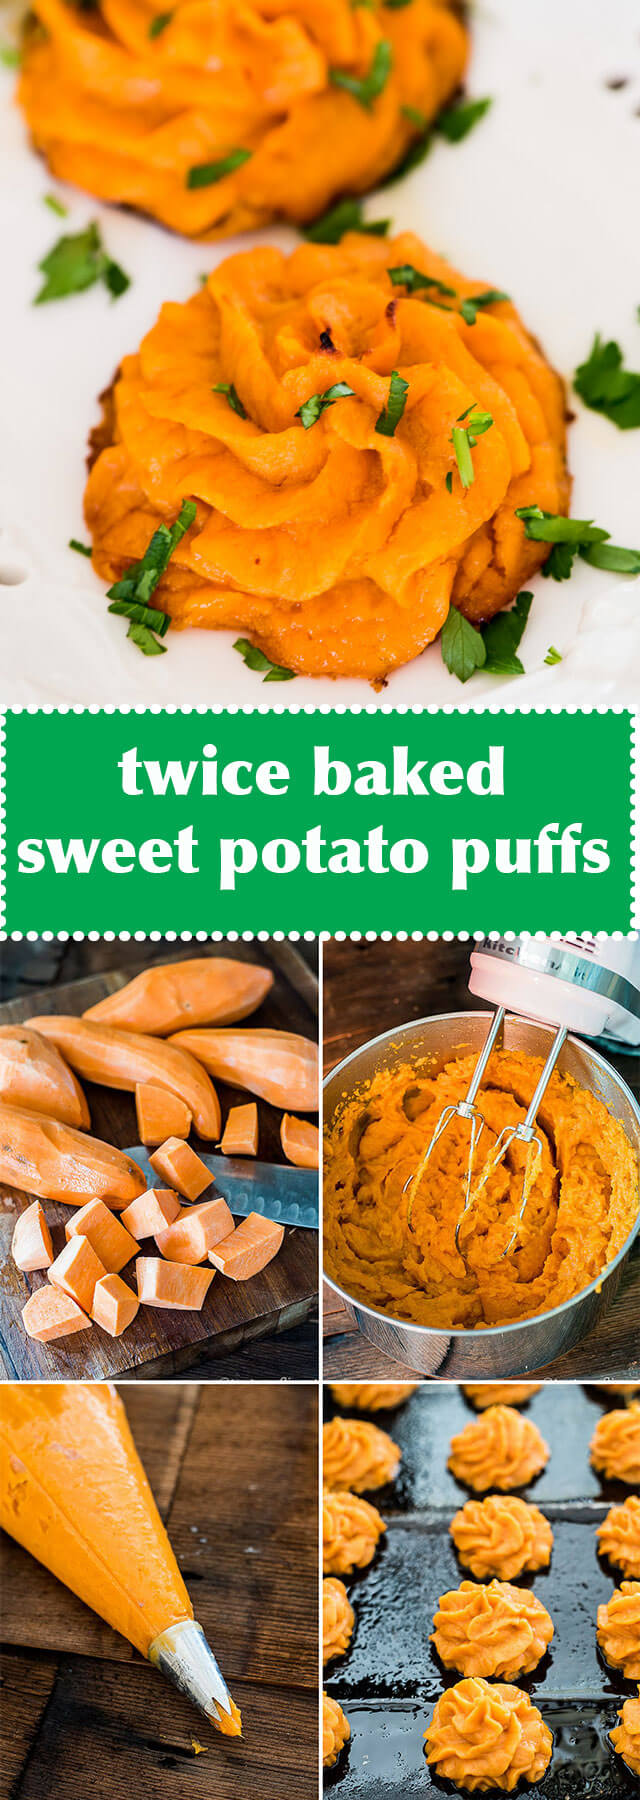 Savory mashed sweet potato puffs make an elegant, healthy side dish for ...